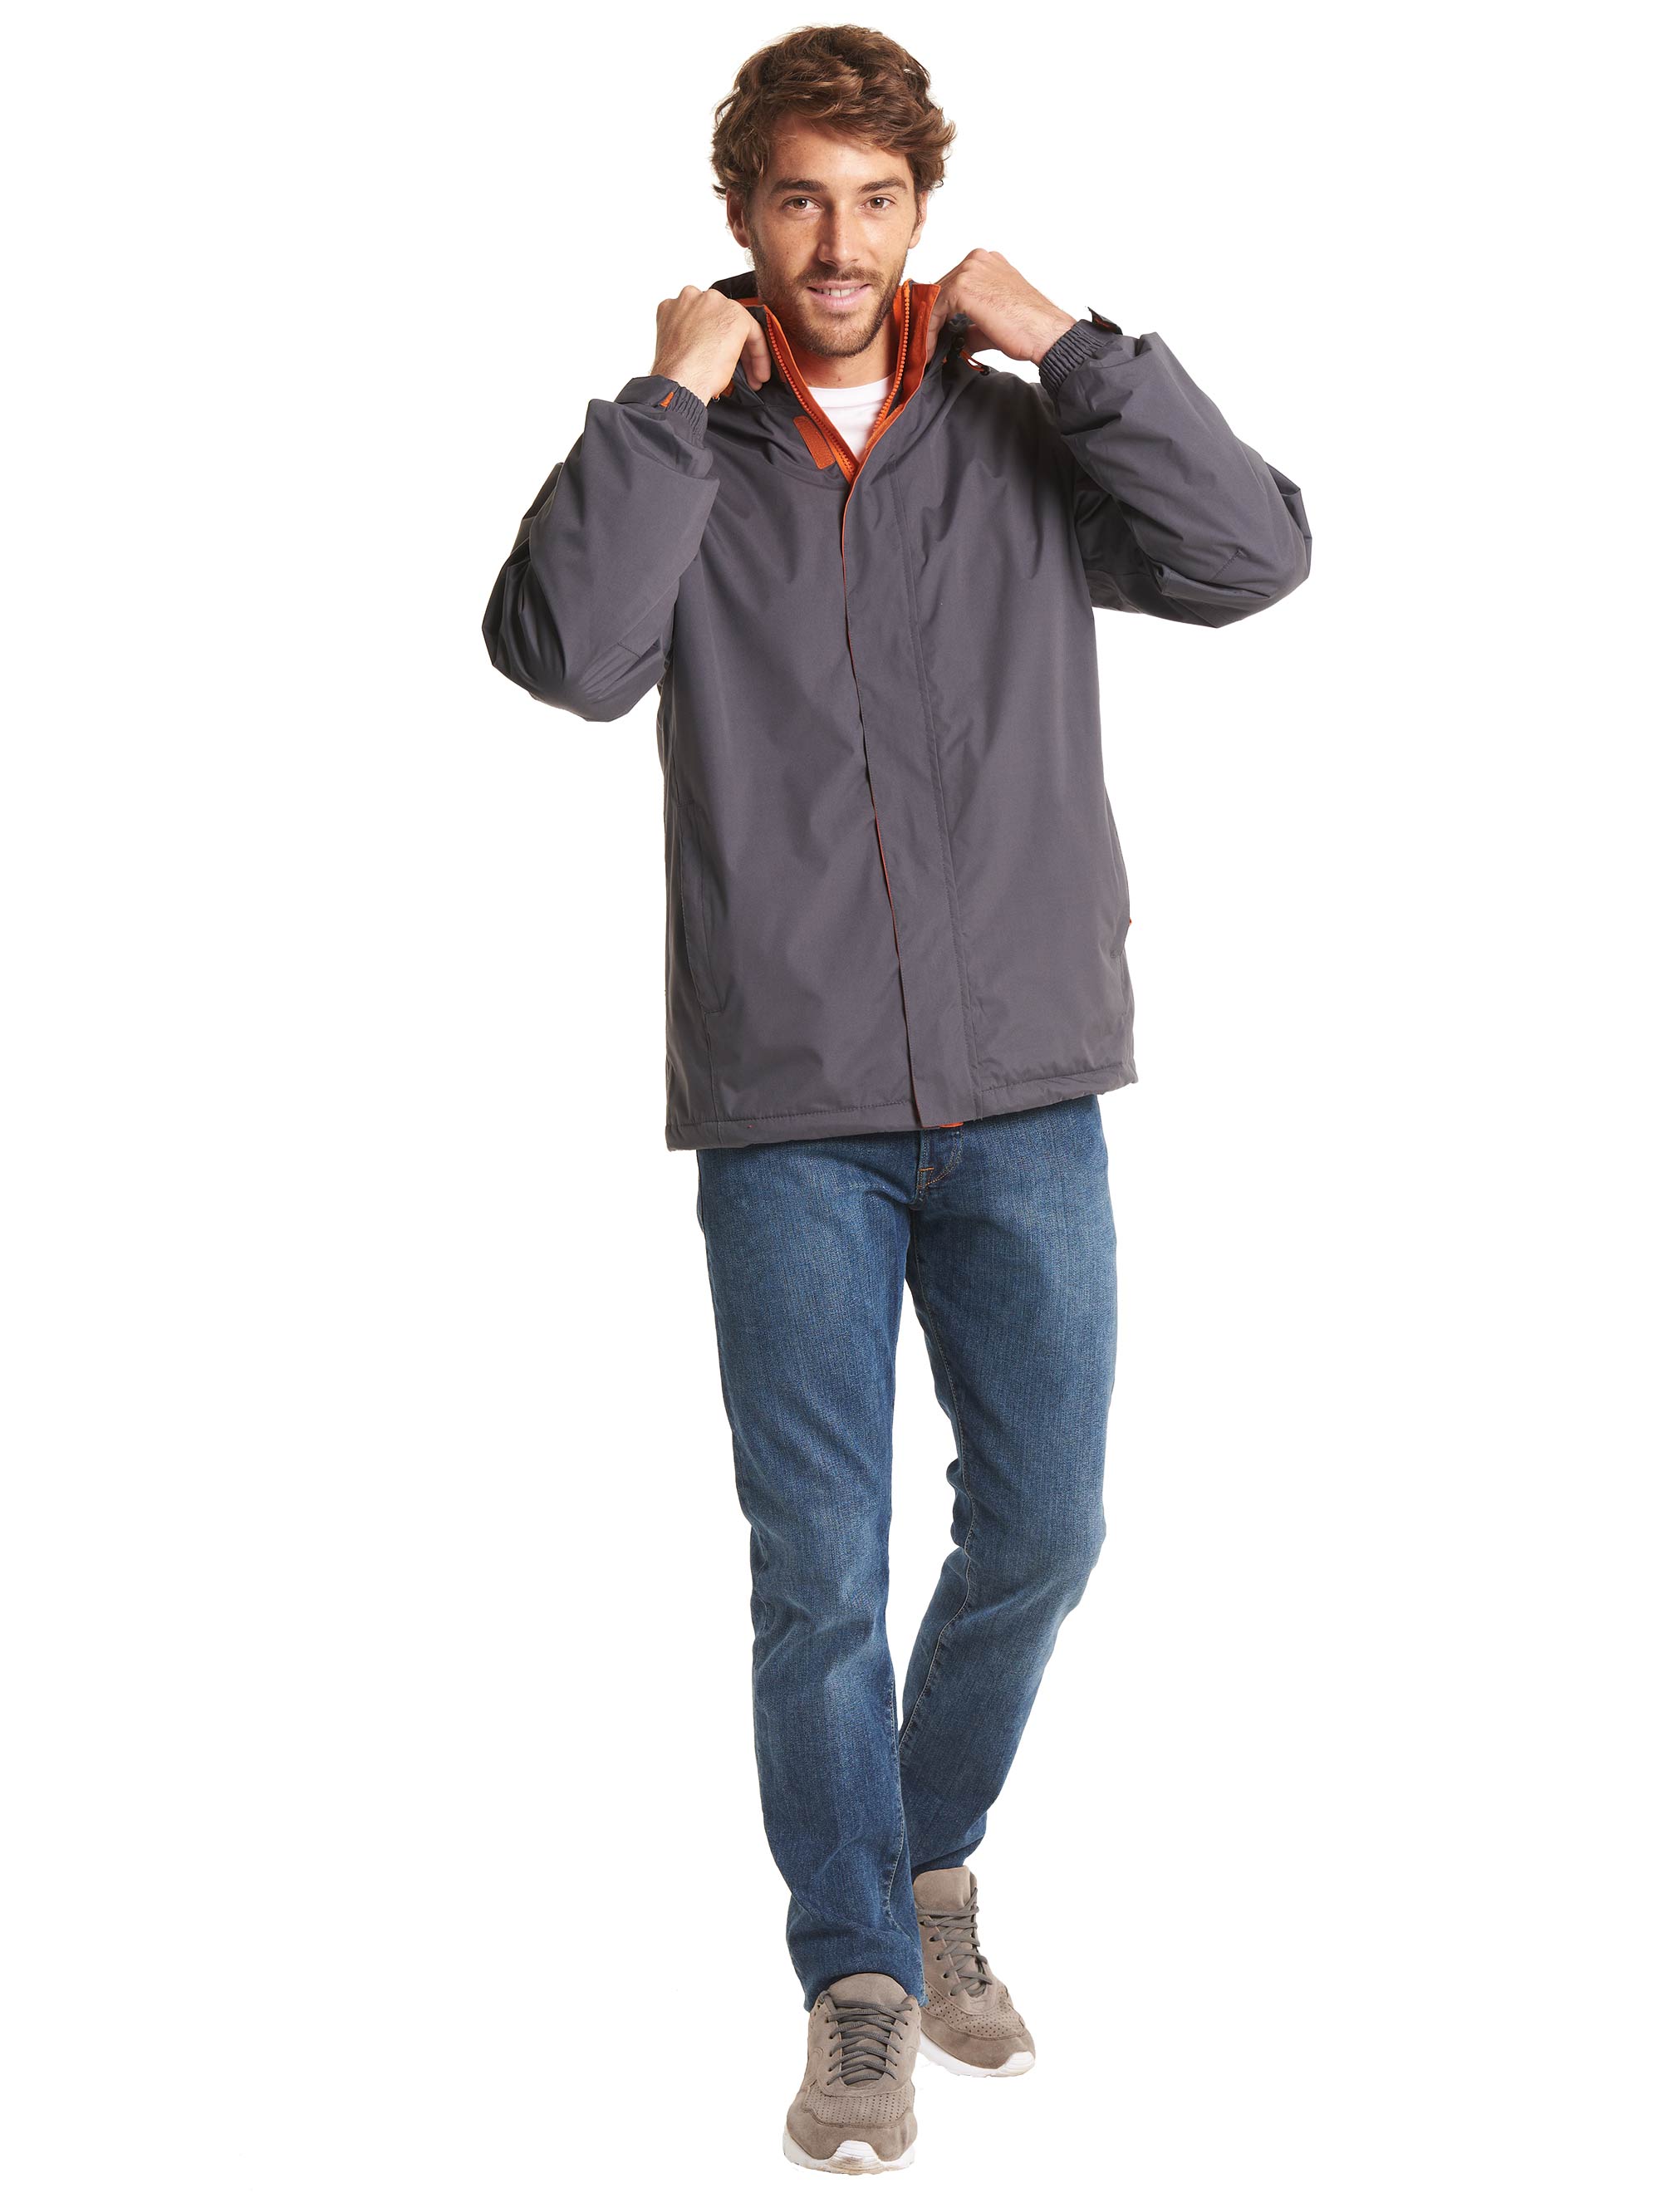 Uneek Deluxe Outdoor Jacket - Clothing - Clothing - Shirts - 621BK2XL